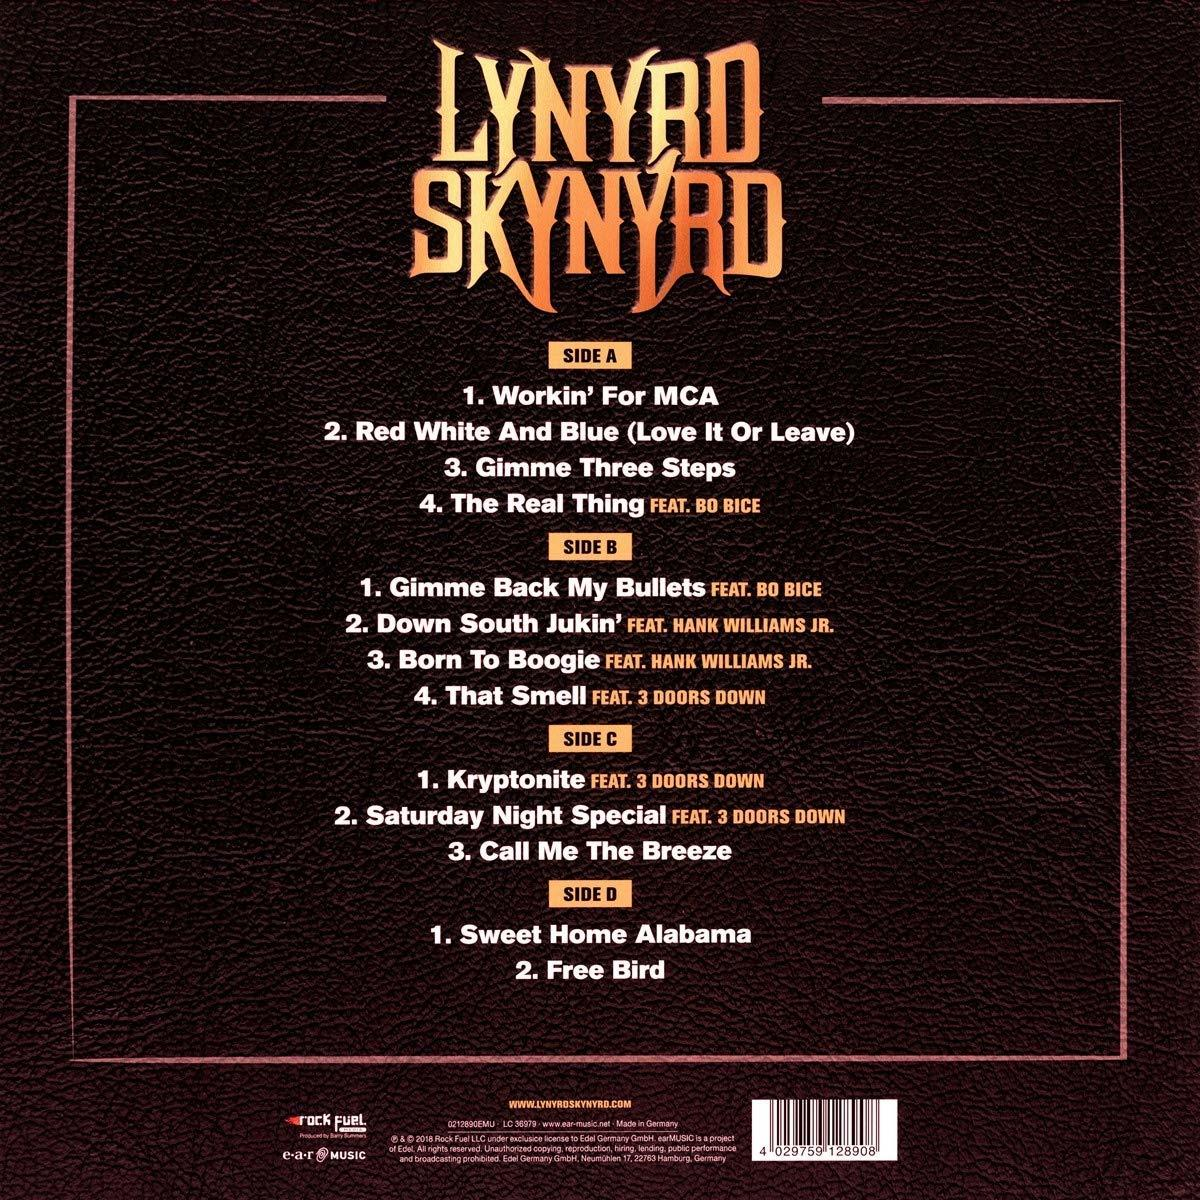 (Vinyl) - - City Lynyrd Atlantic Live Skynyrd In